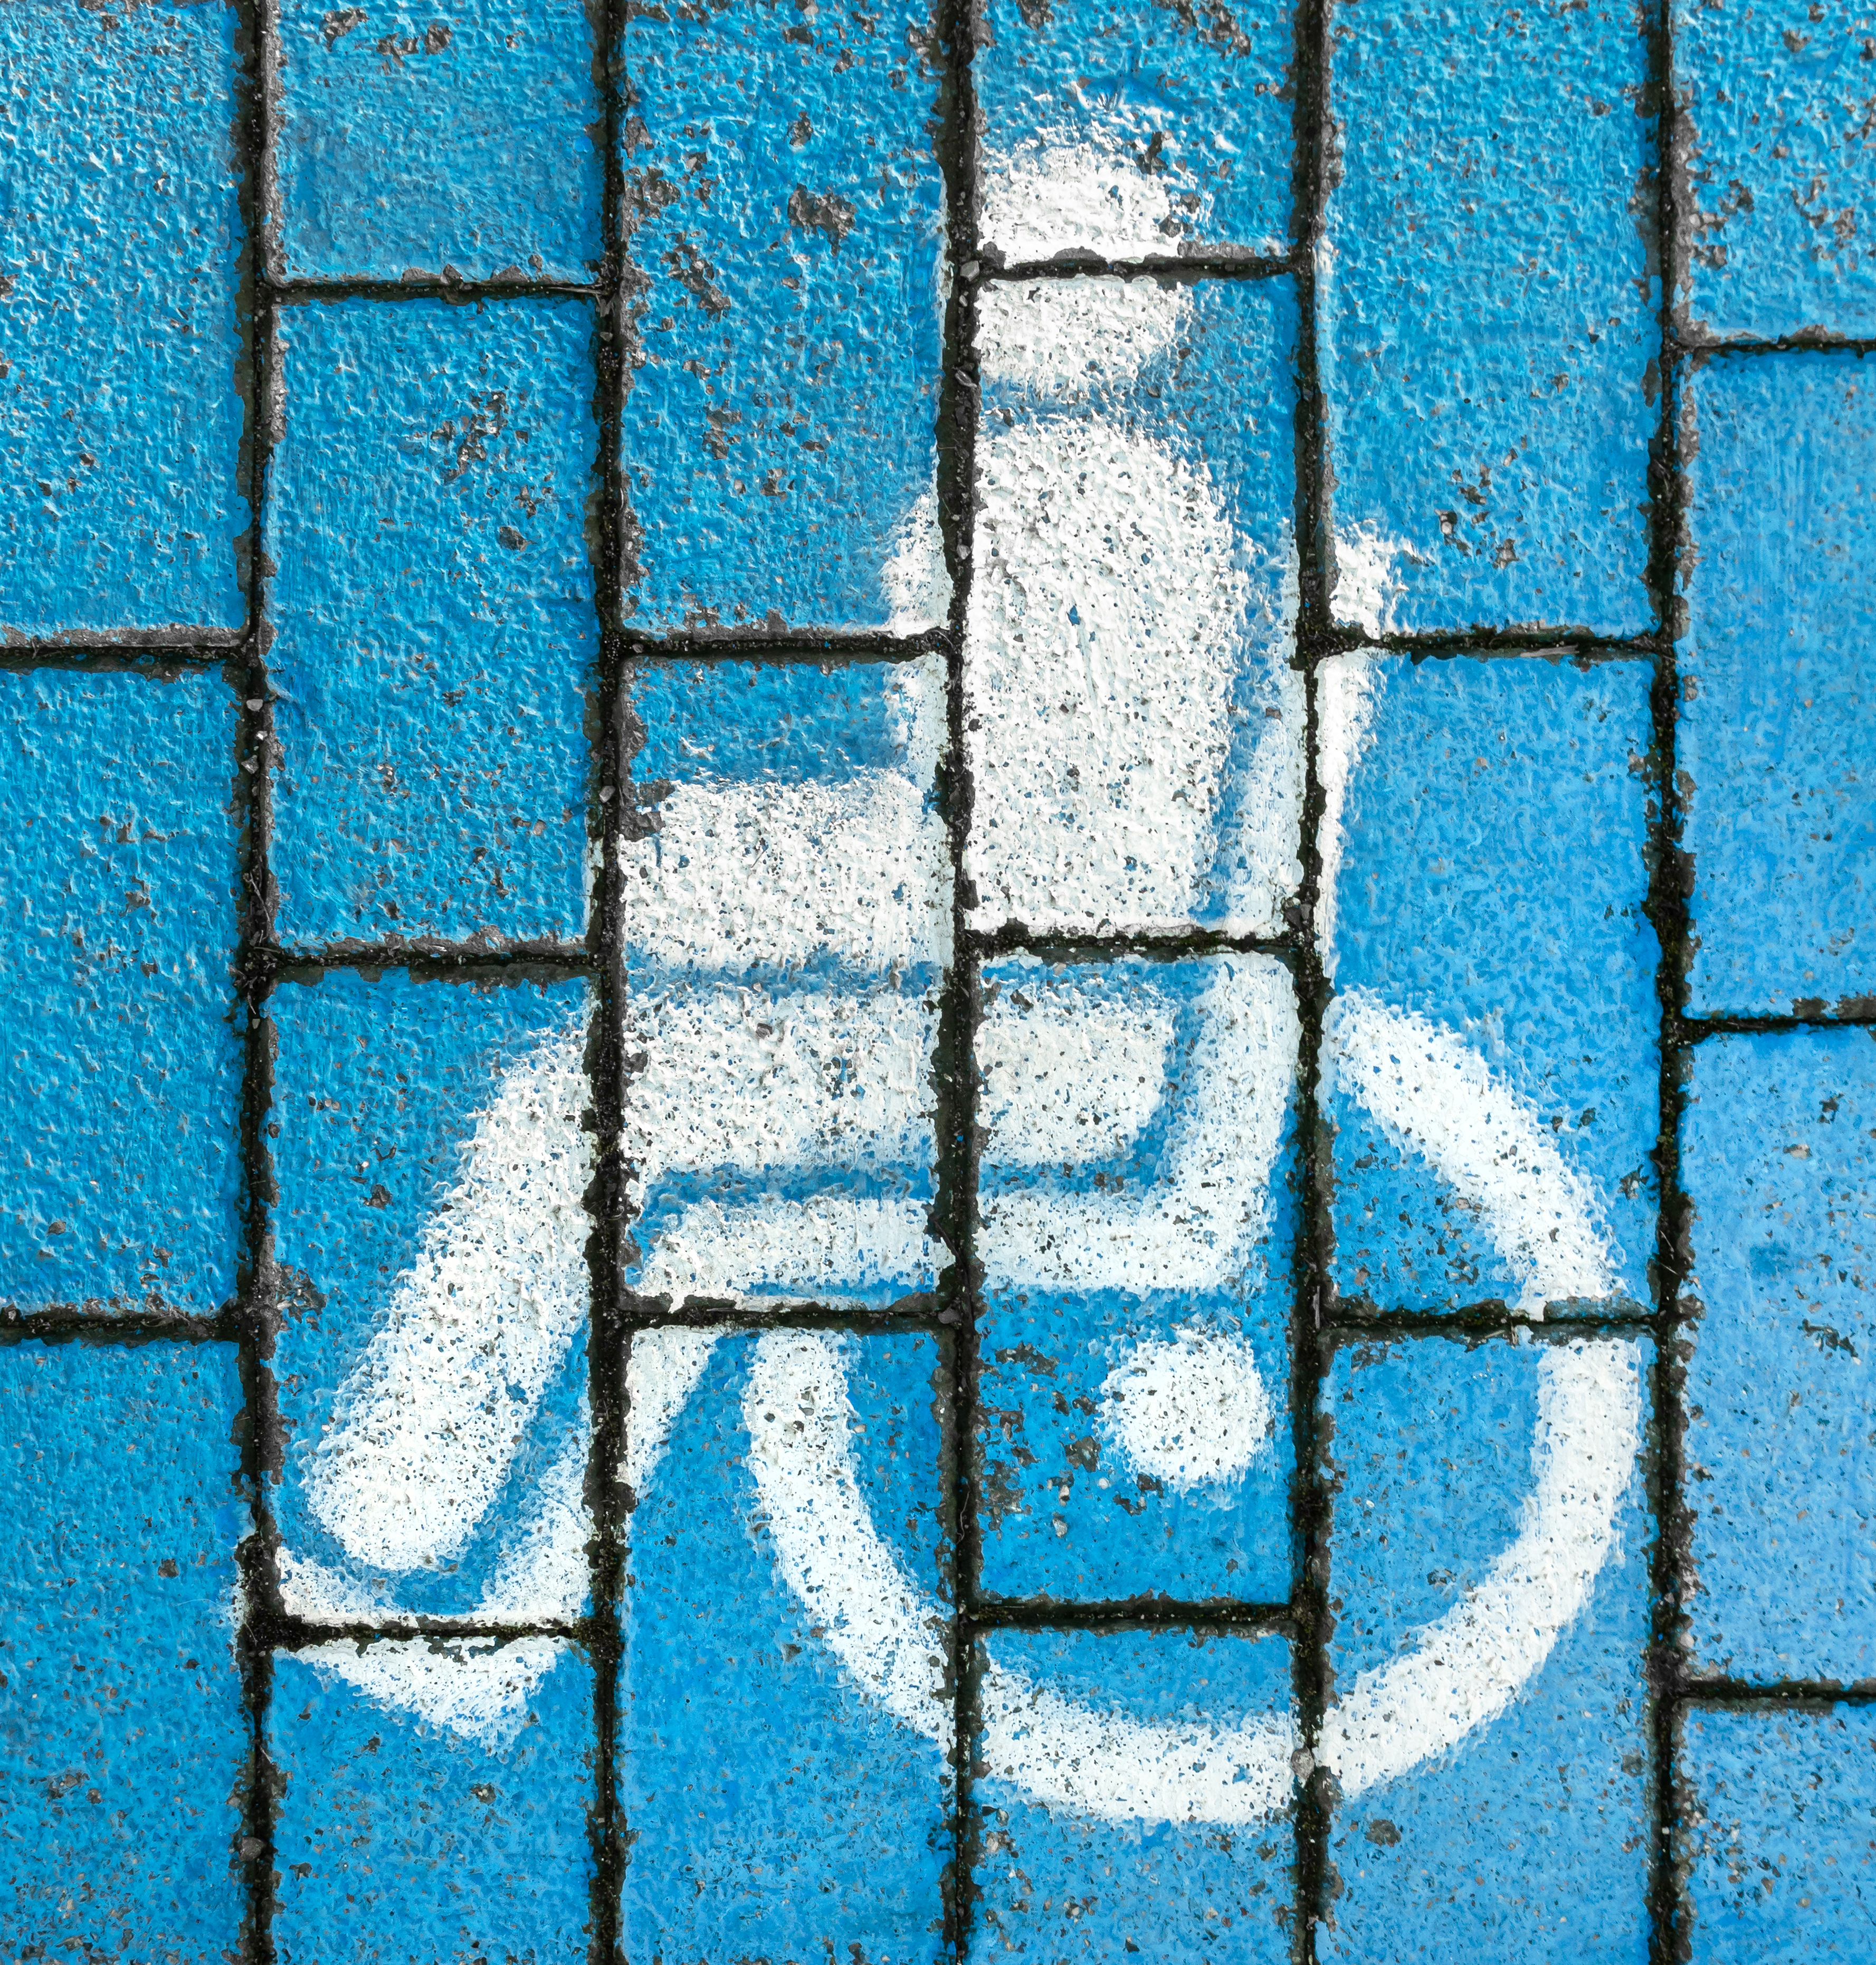 A wheelchair symbol spray painted on blue bricks.